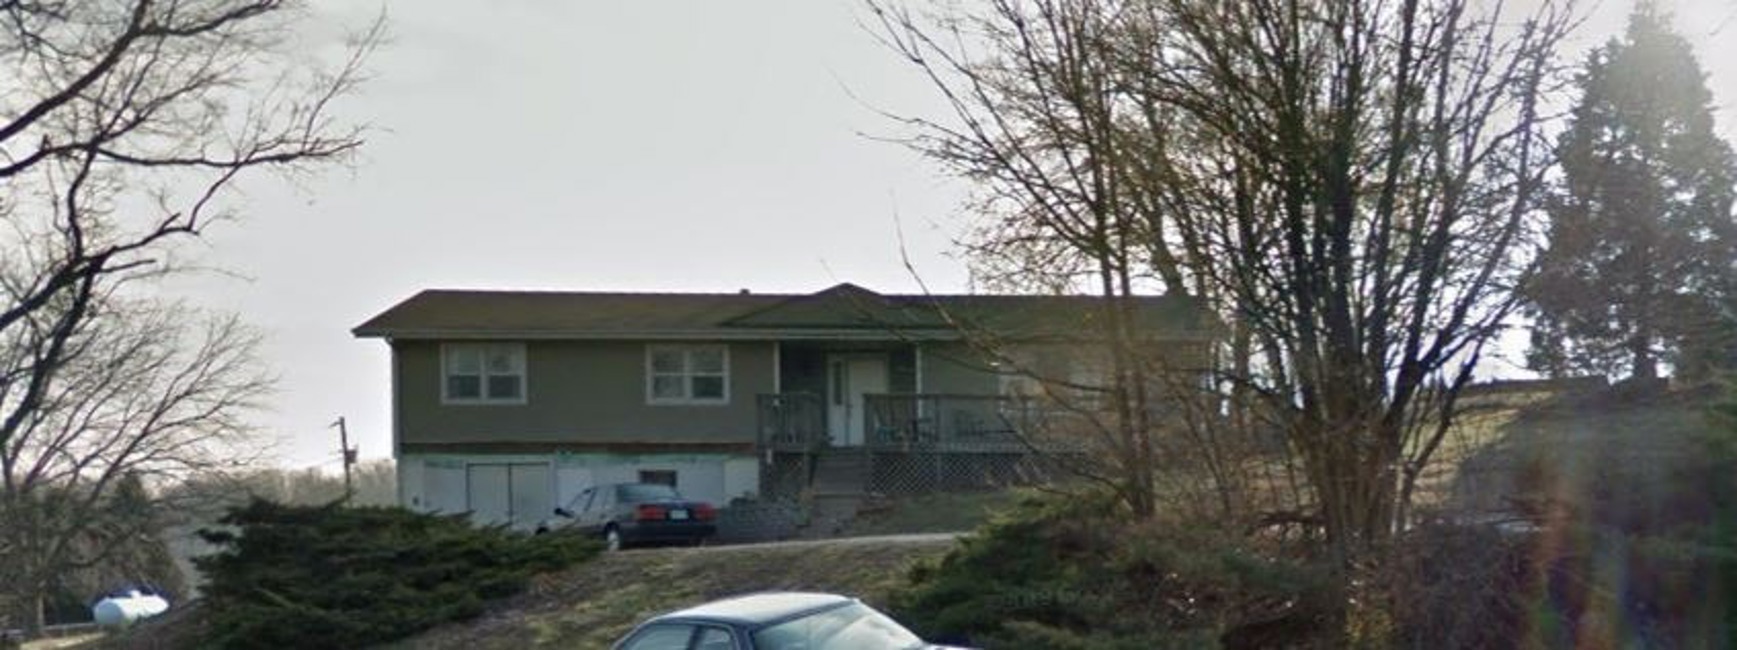 Foreclosure Trustee, 156 Park Blvd E, Ozark, MO 65721